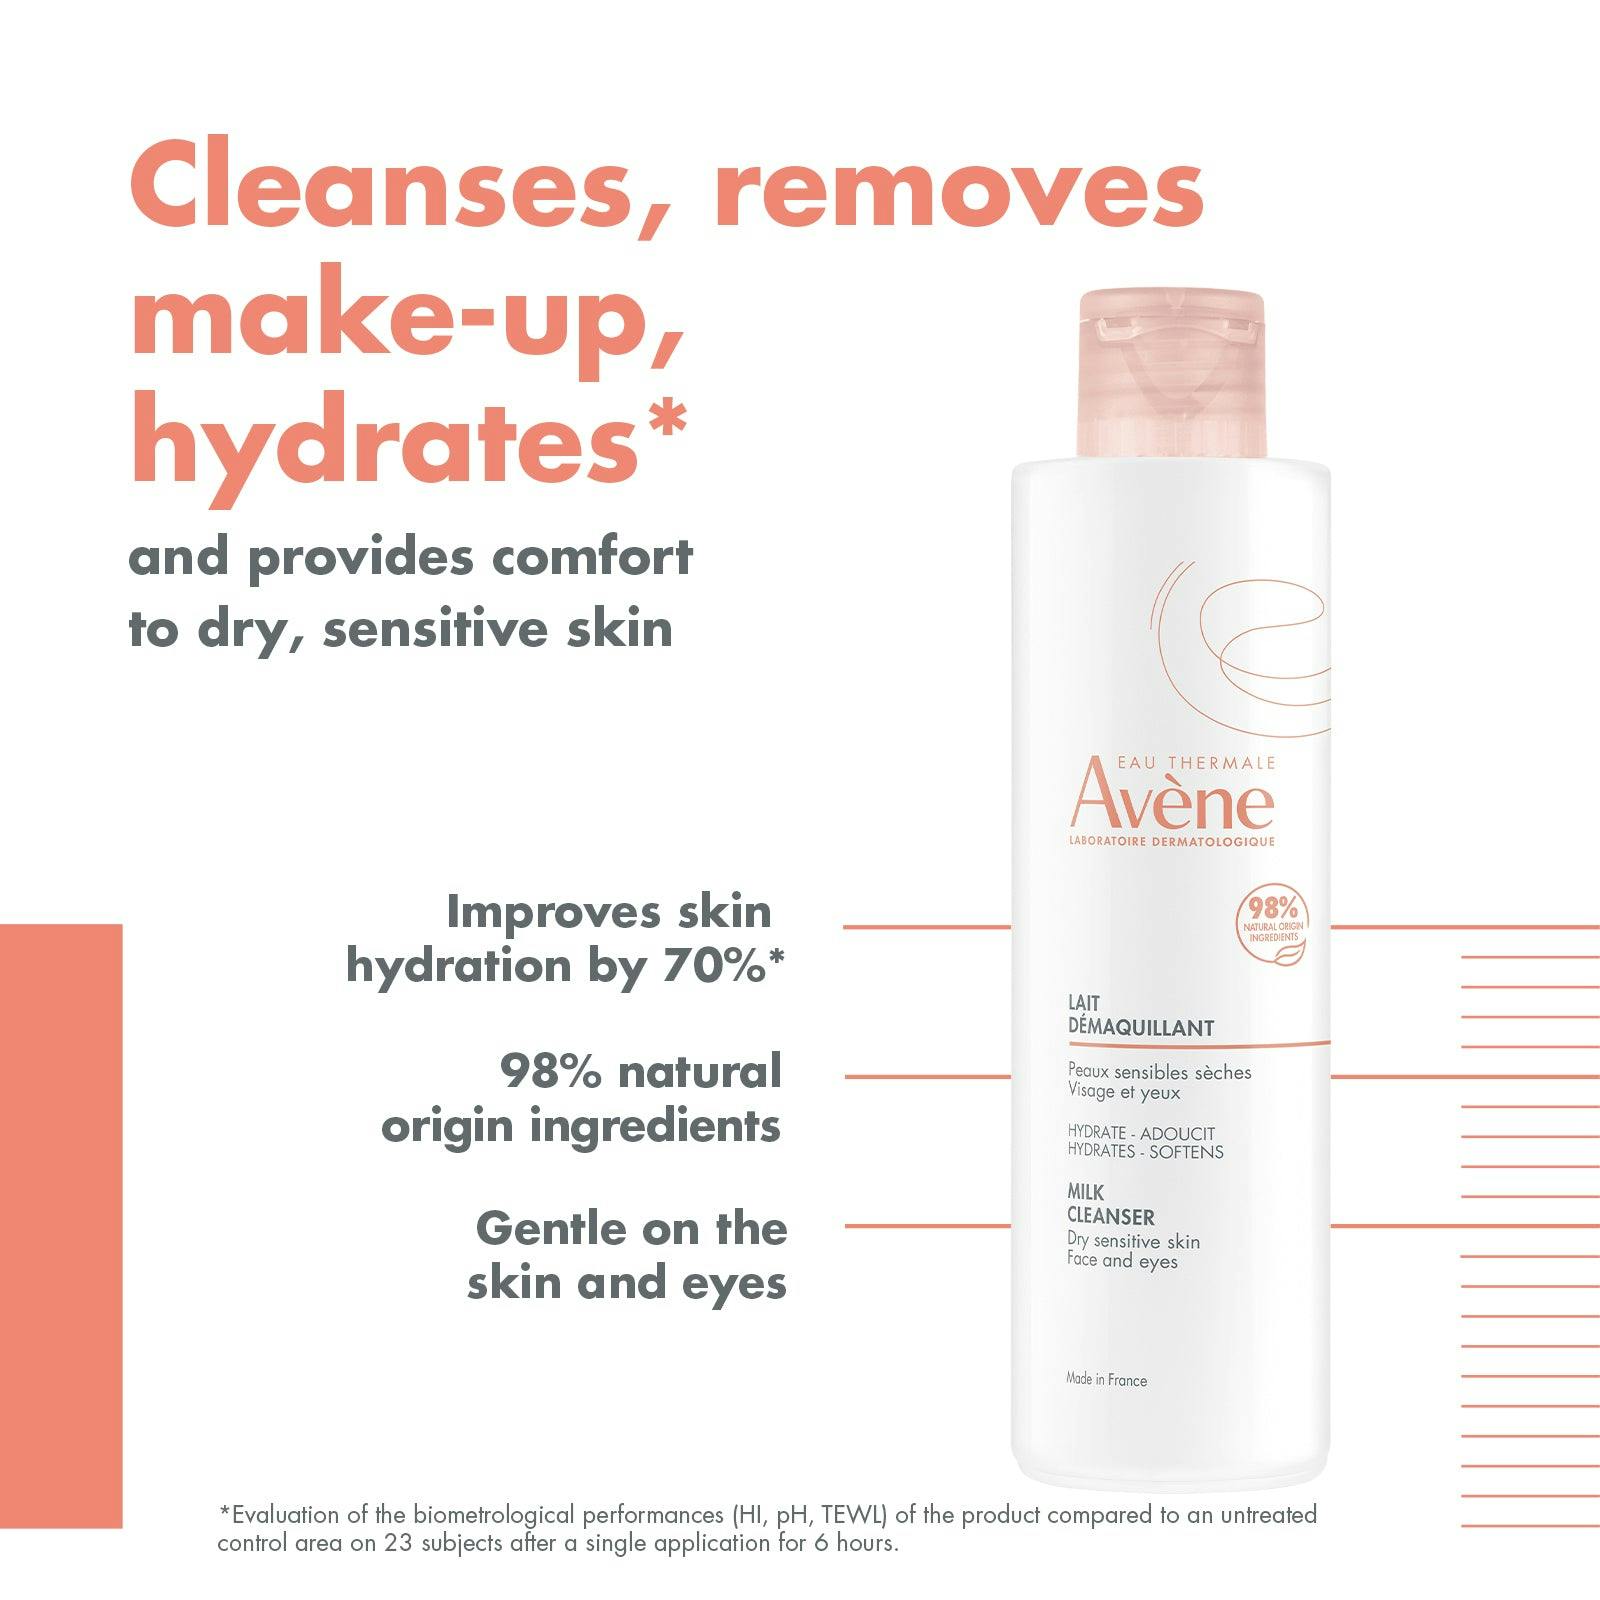 Avène Gentle Milk Cleanser 200ml - Cleanser for Dry Sensitive Skin